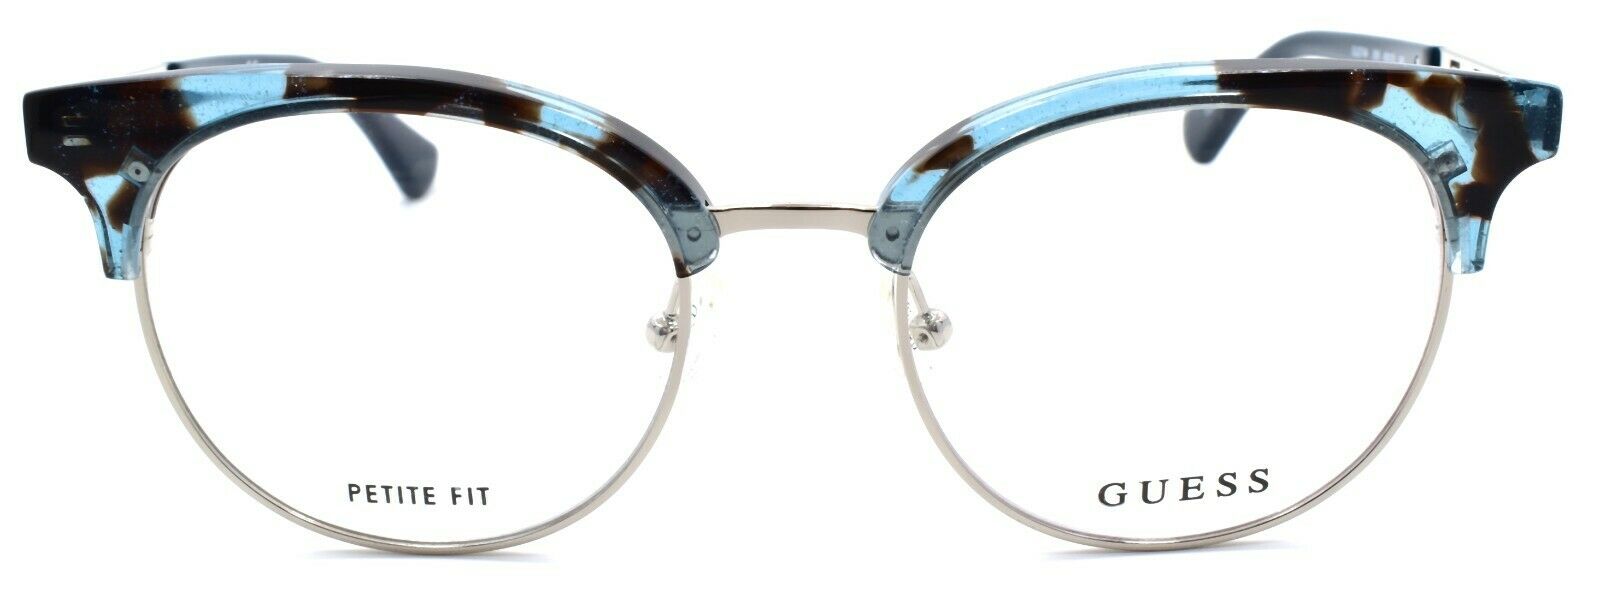 2-GUESS GU2744 089 Women's Eyeglasses Frames Petite 49-19-140 Turquoise / Silver-889214111210-IKSpecs